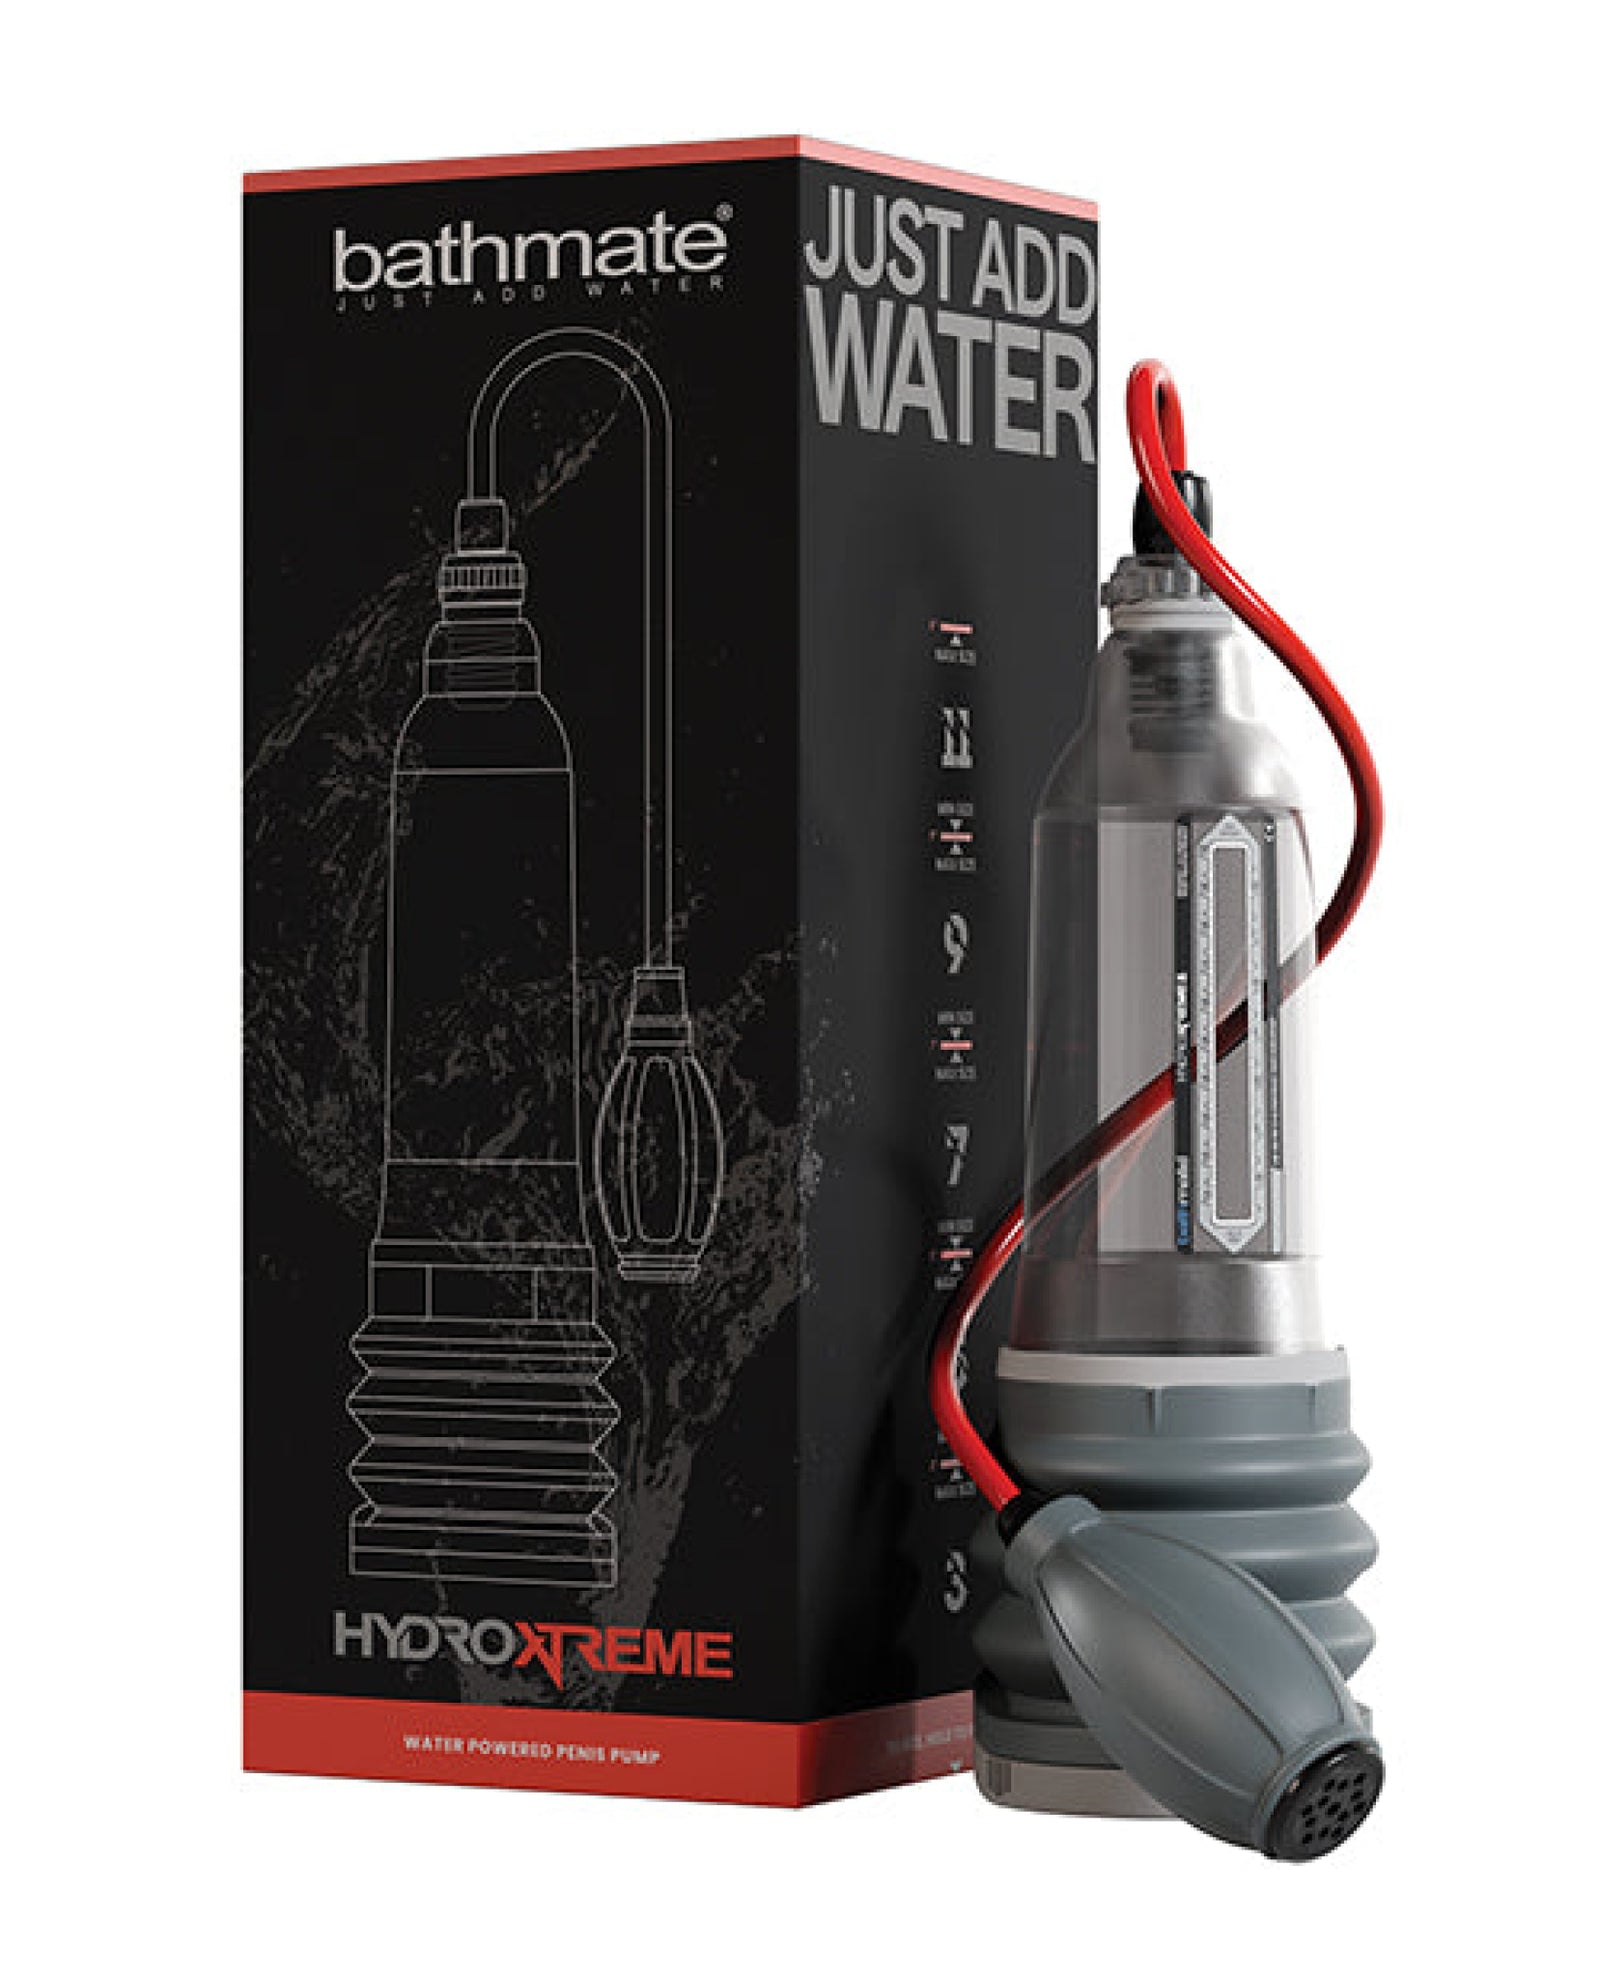 Bathmate Hydroxtreme 8 - Clear Bathmate